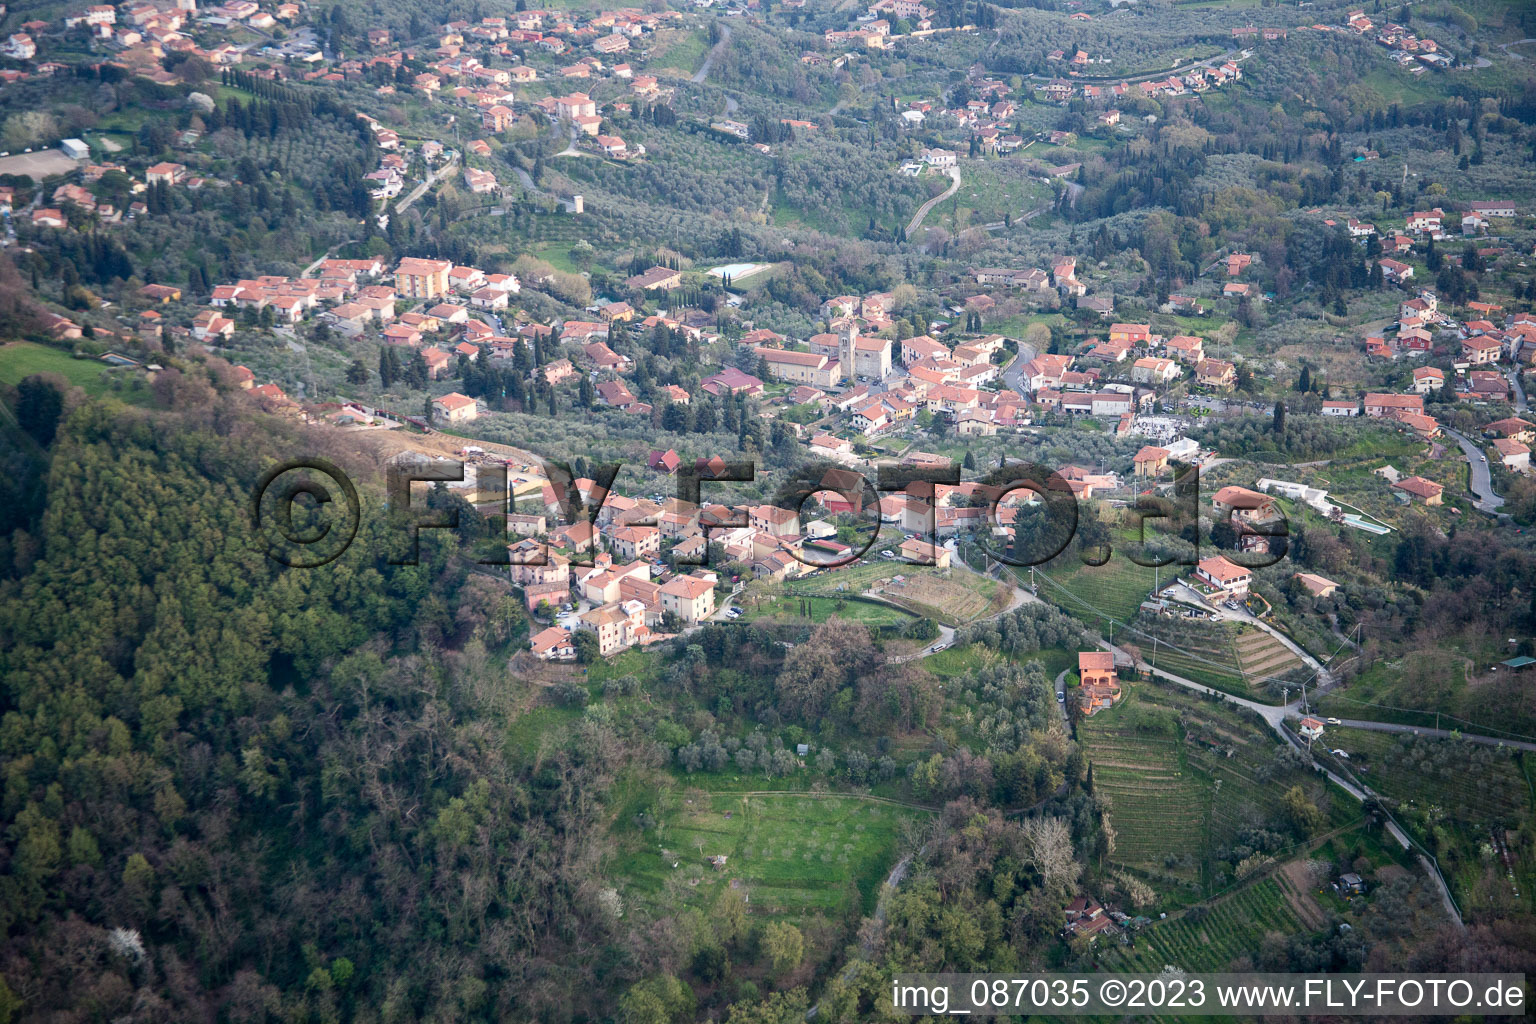 Pedona(I-Toskana) im Bundesland Toscana, Italien von oben gesehen